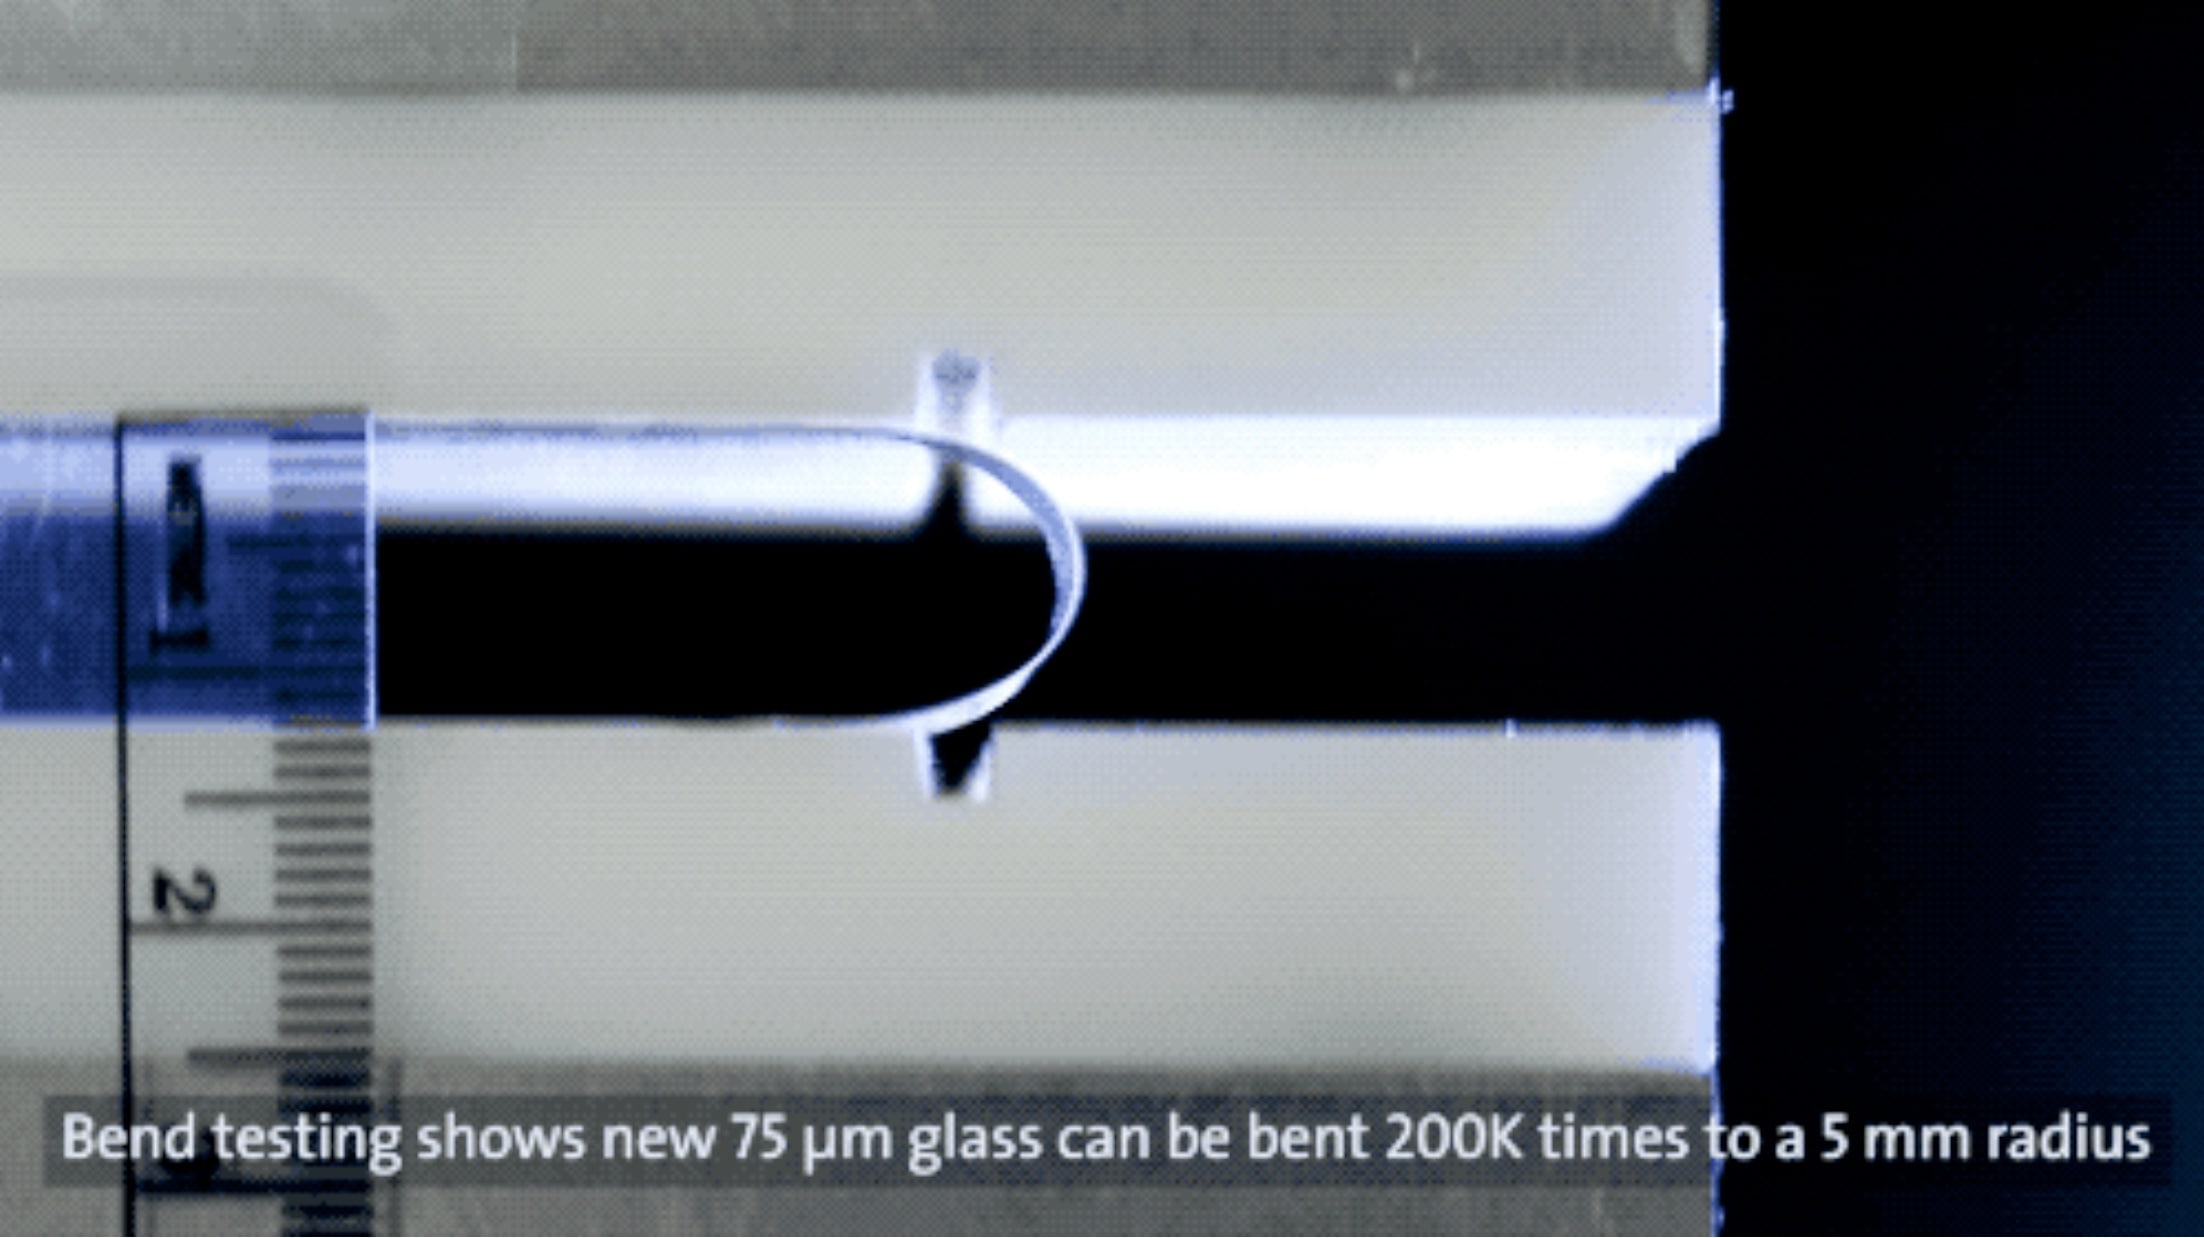 That’s Corning flexible glass, not plastic.